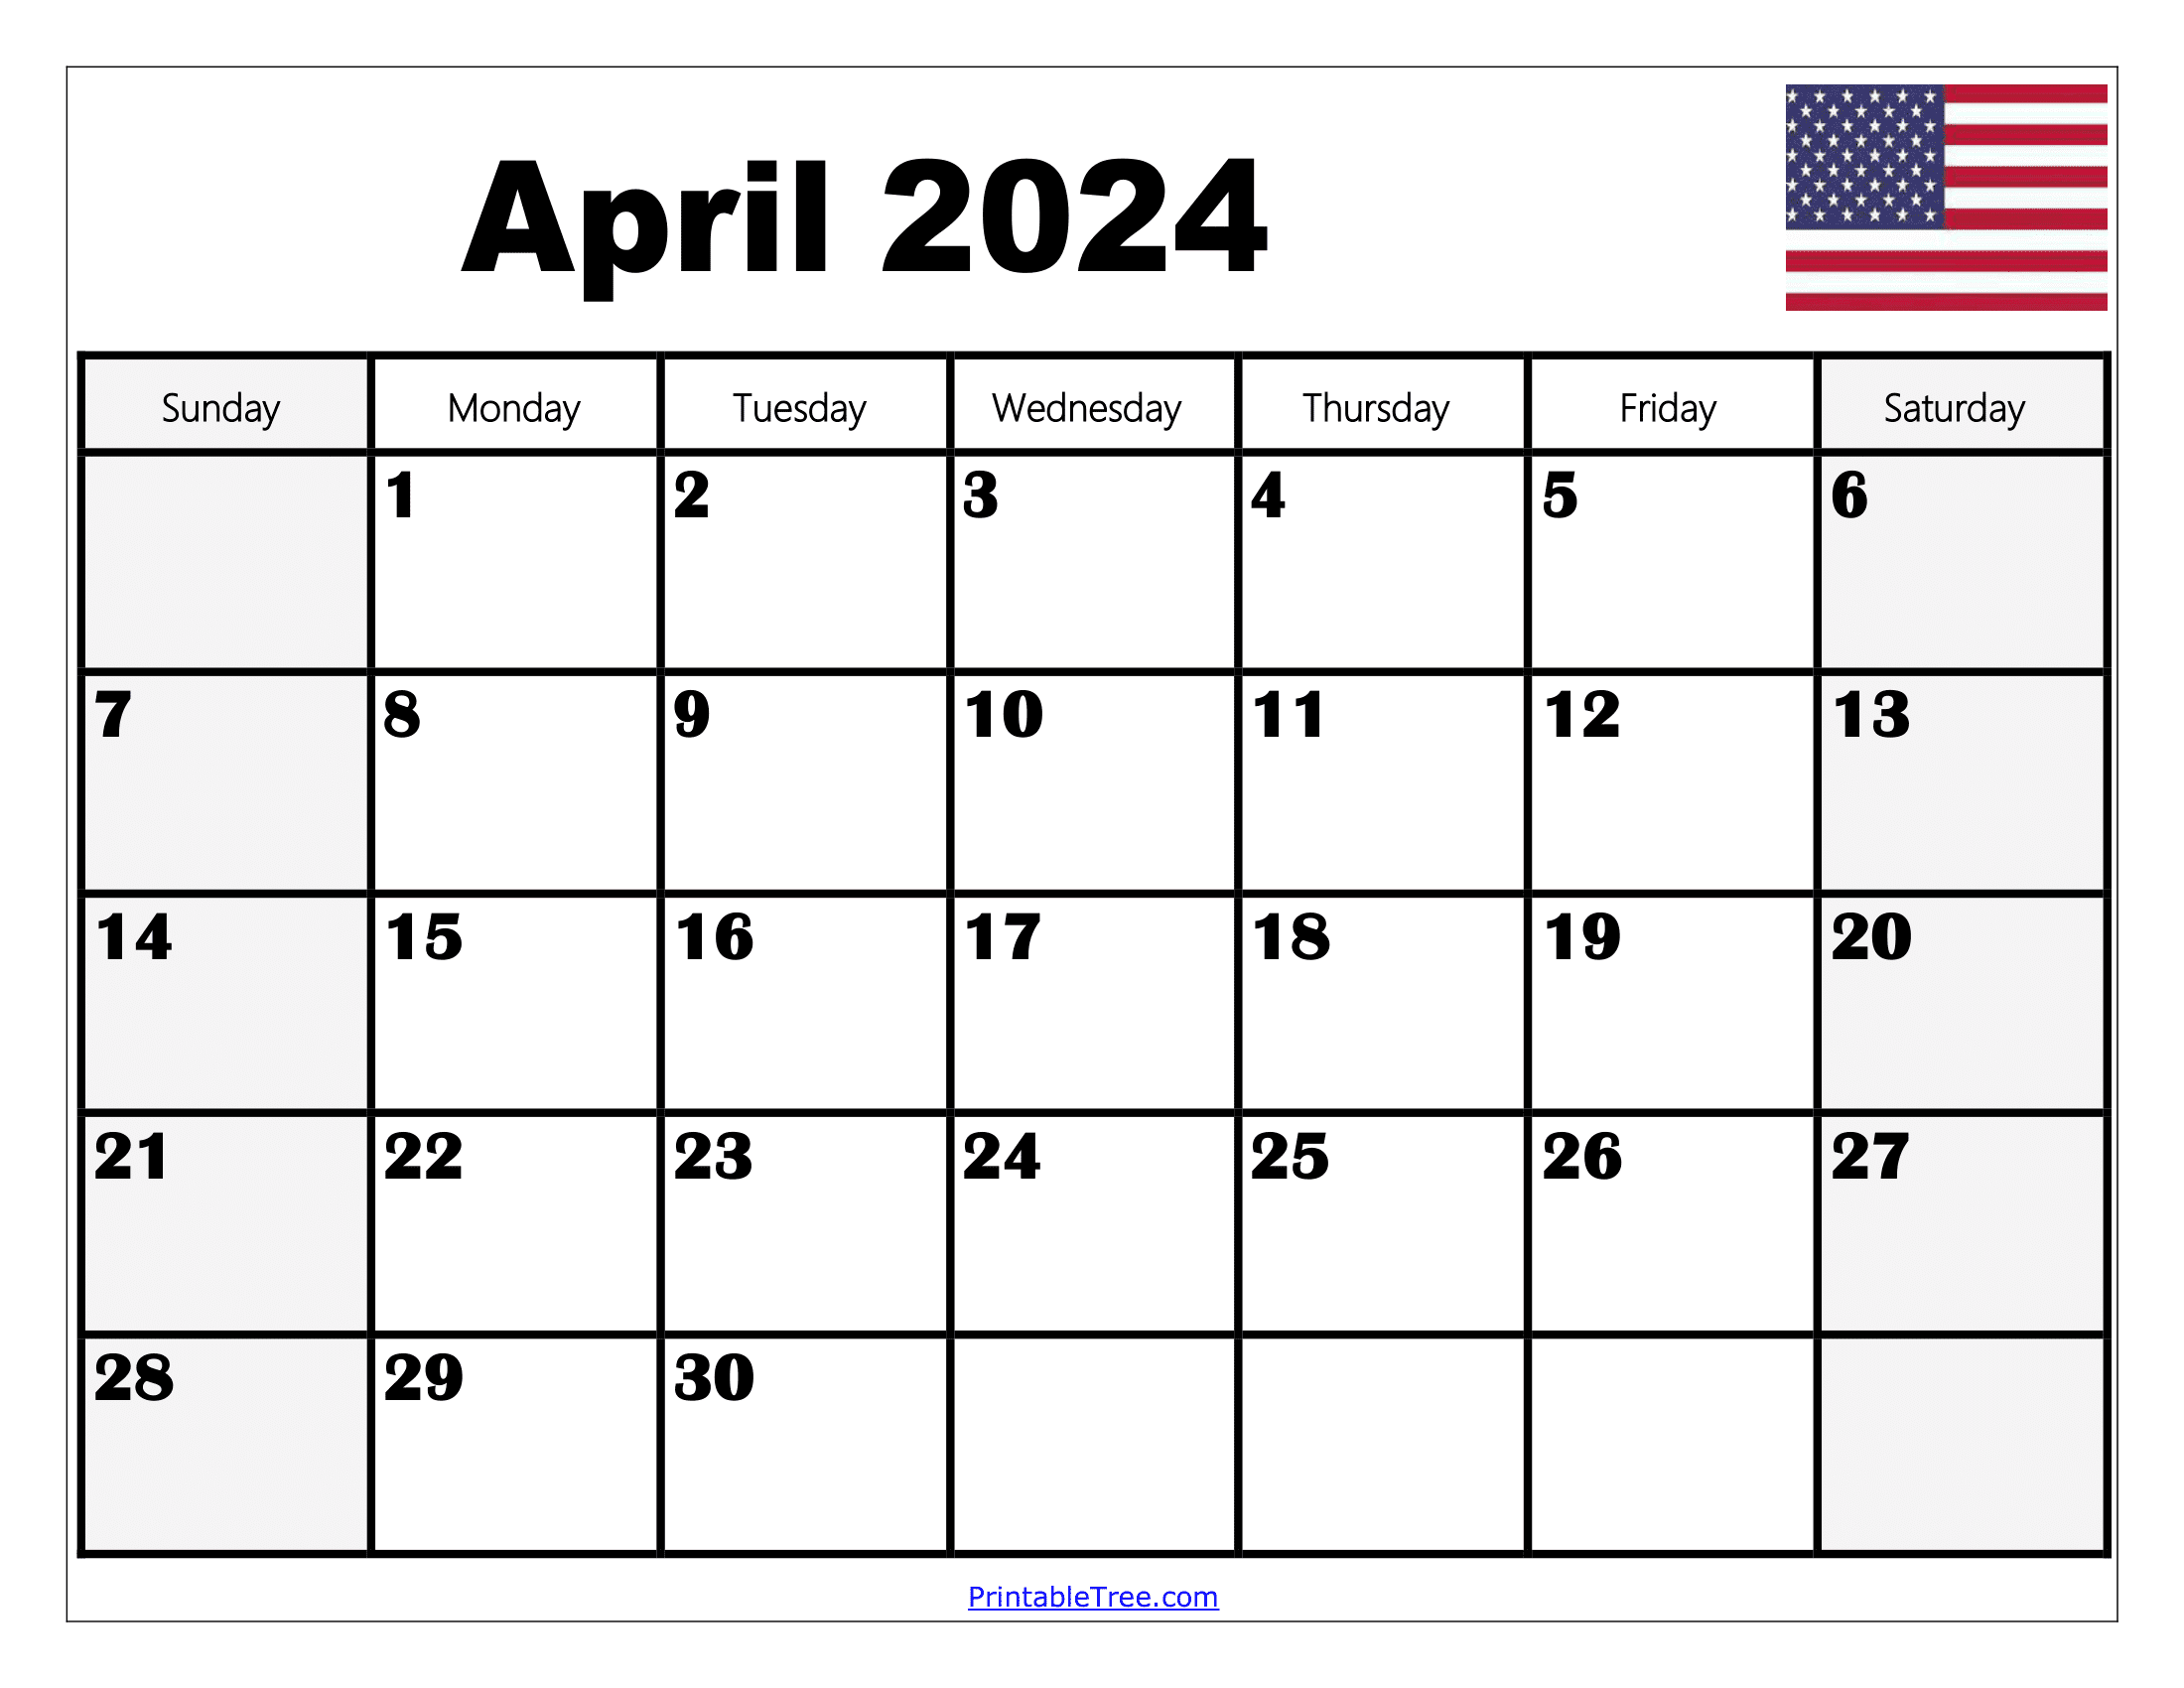 Blank April 2024 Calendar Printable Pdf Template With Holidays for April 2024 Calendar Printable With Holidays